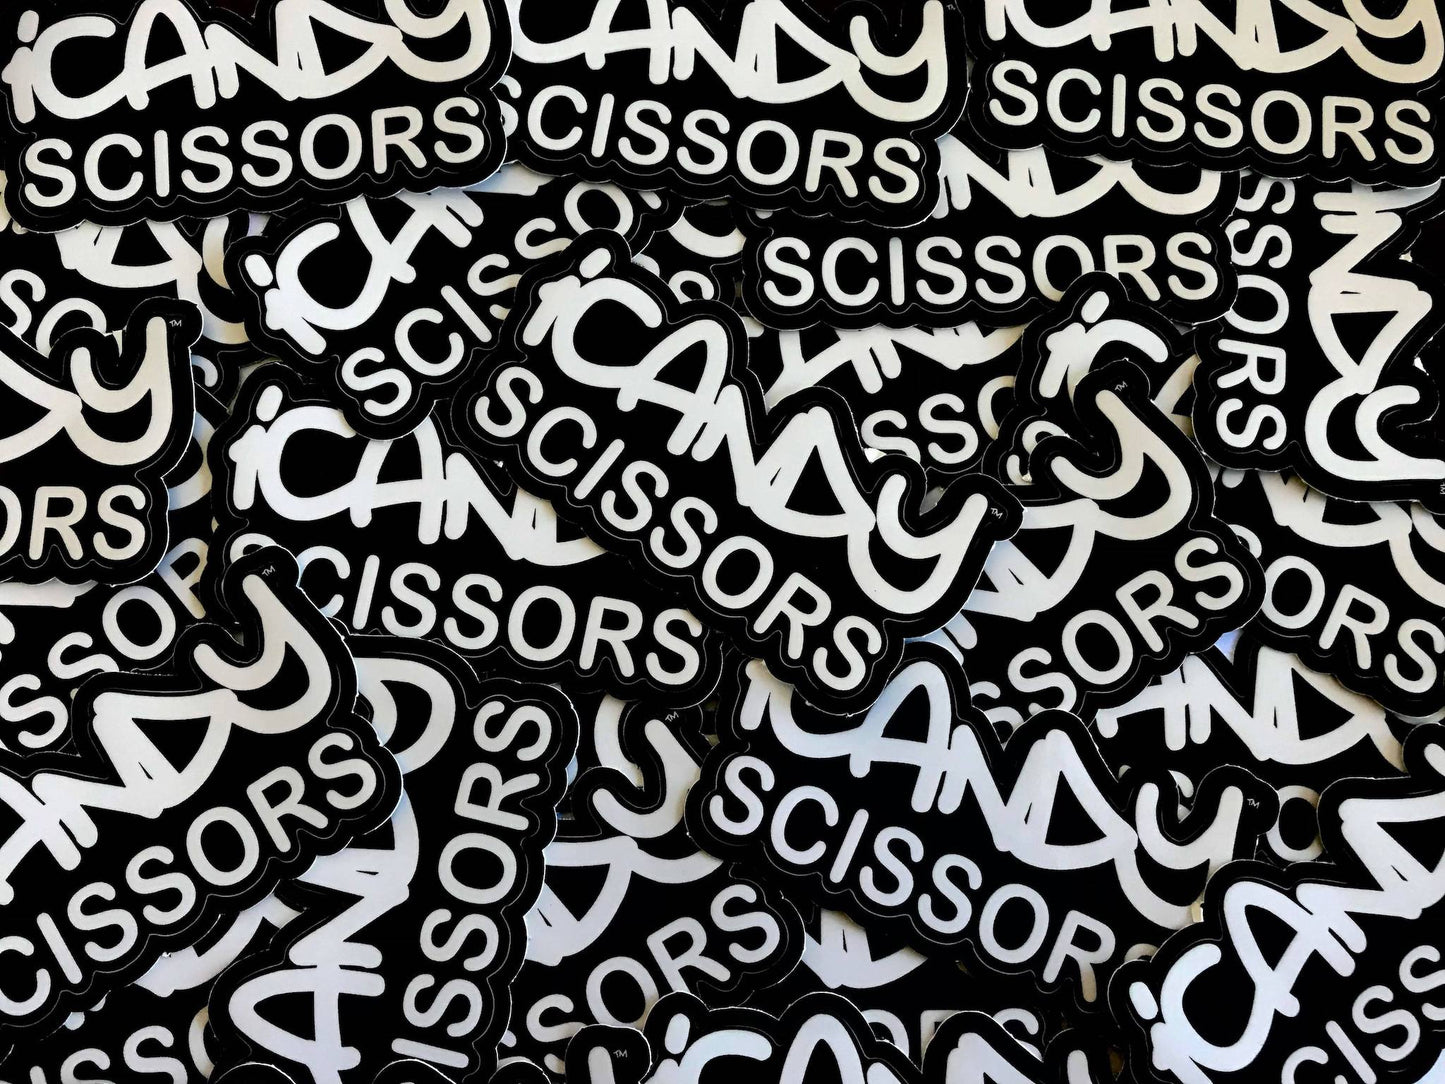 iCandy Scissors Logo Multiples on White Background